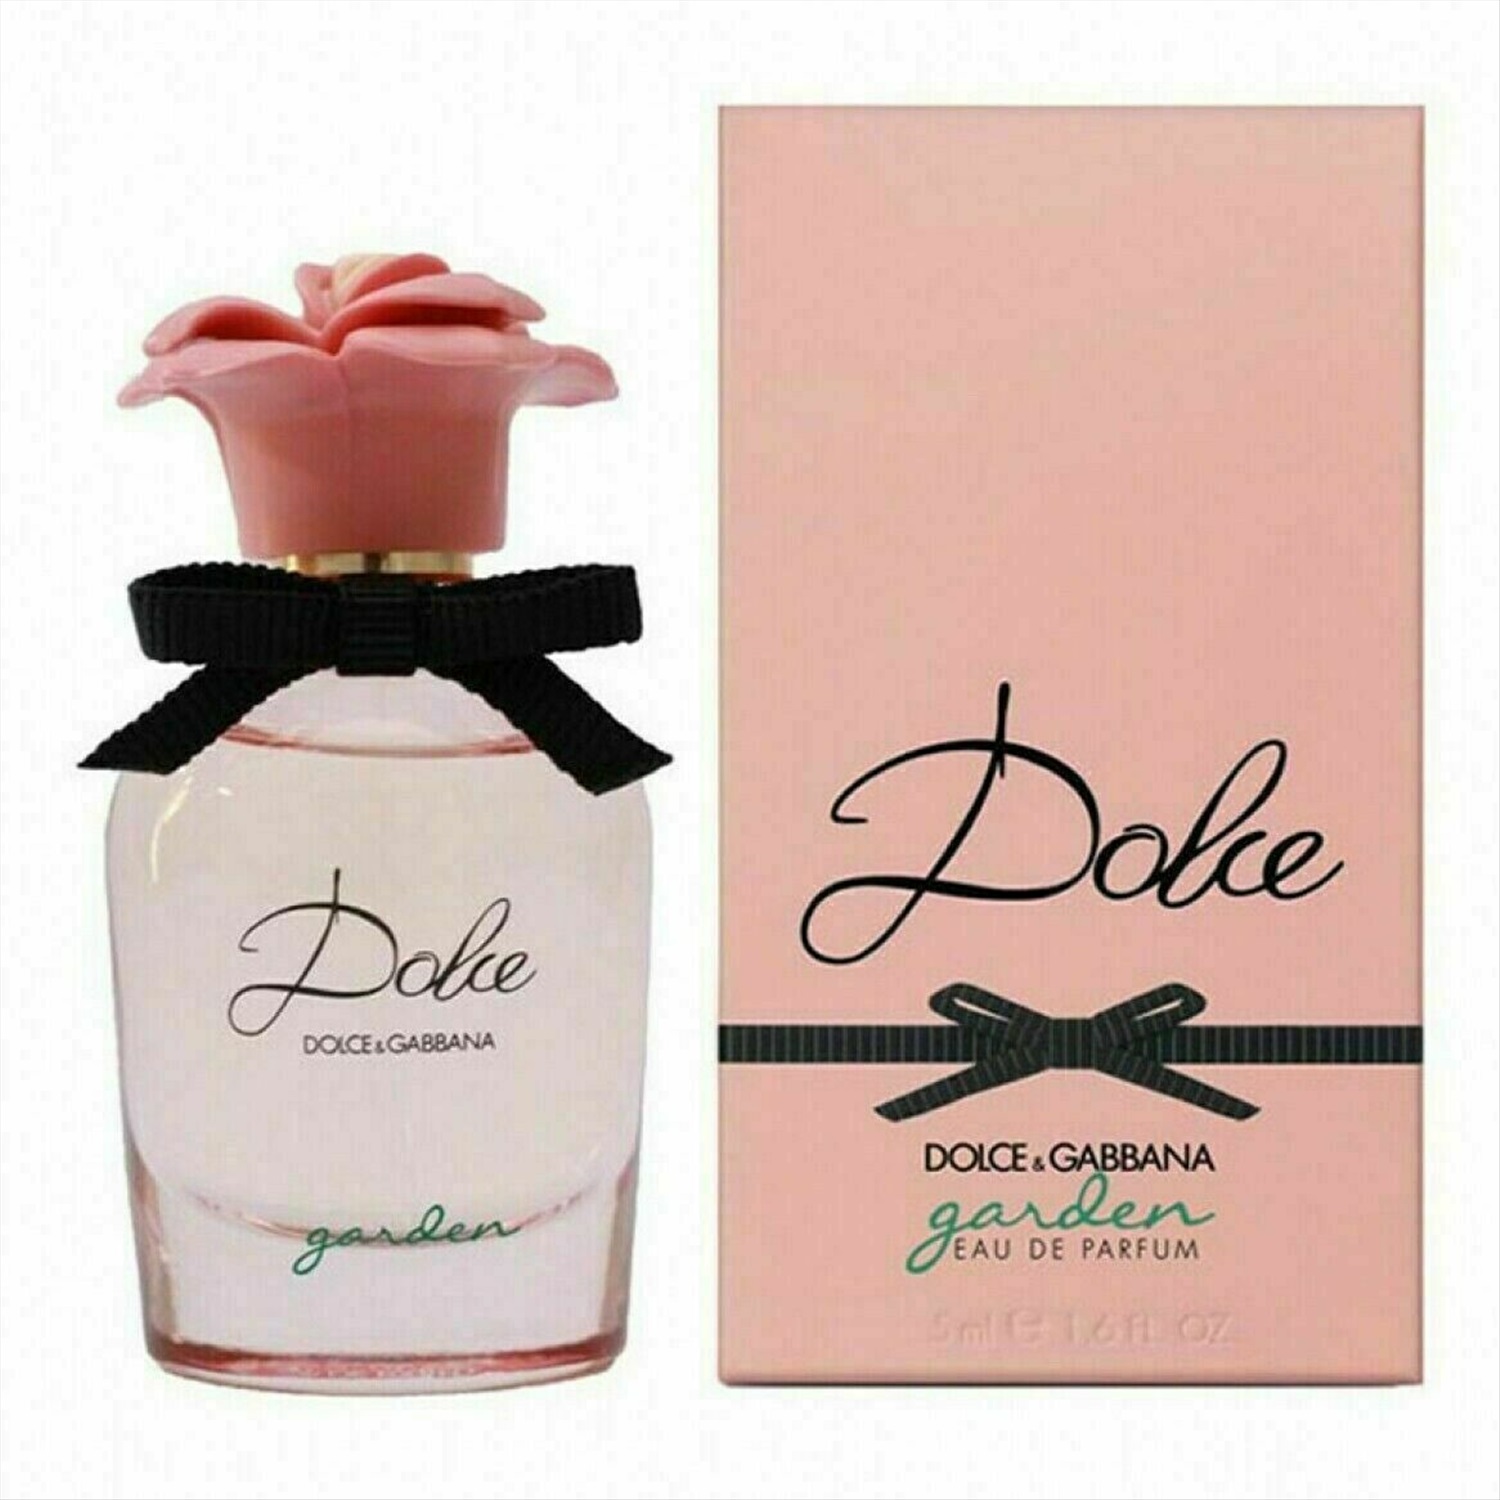 Dolce gabbana dolce 30 мл. D&G Dolce Garden EDP 75ml. Dolce&Gabbana Dolce Garden 75. Dolce Gabbana Dolce Garden. Dolce Gabbana Dolce Lady 30ml EDP.